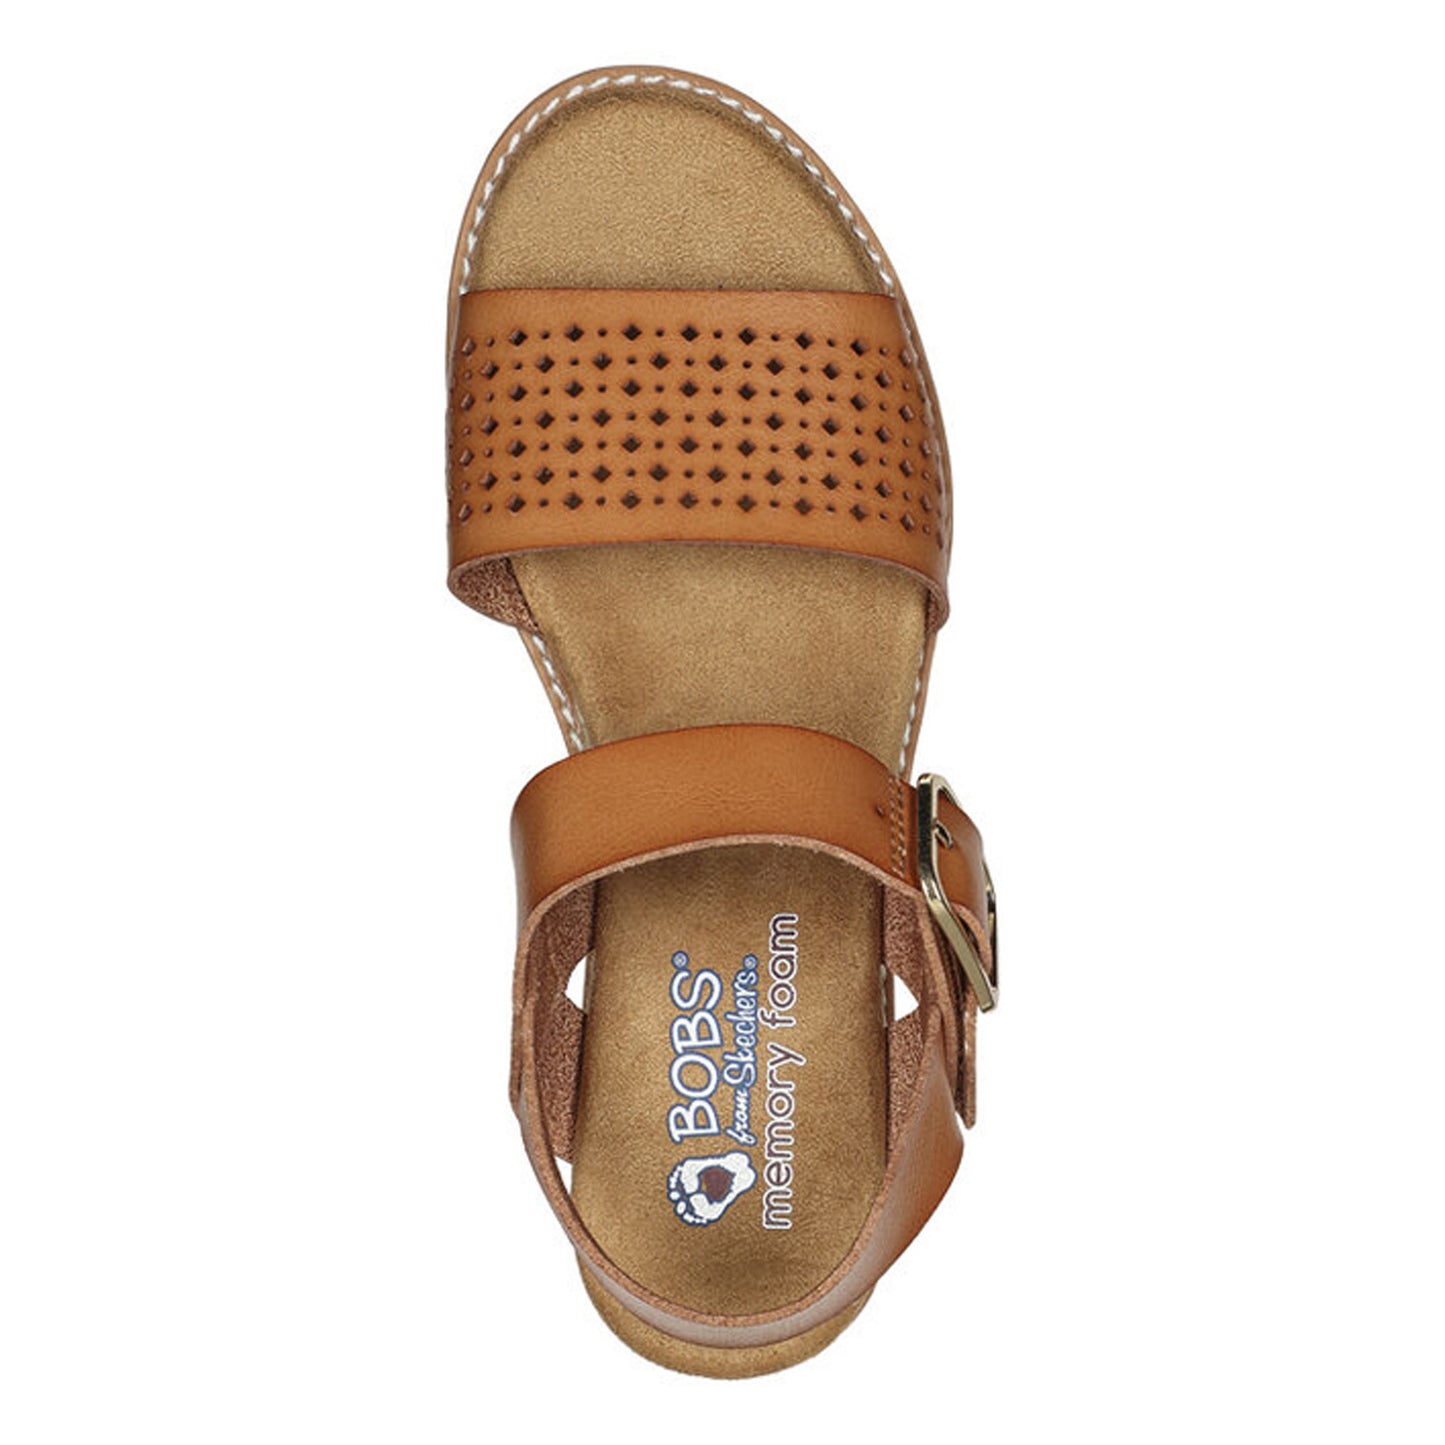 Peltz Shoes  Women's Skechers BOBS Desert Kiss - Sunny Flair Sandal LUGGAGE 114143-LUG